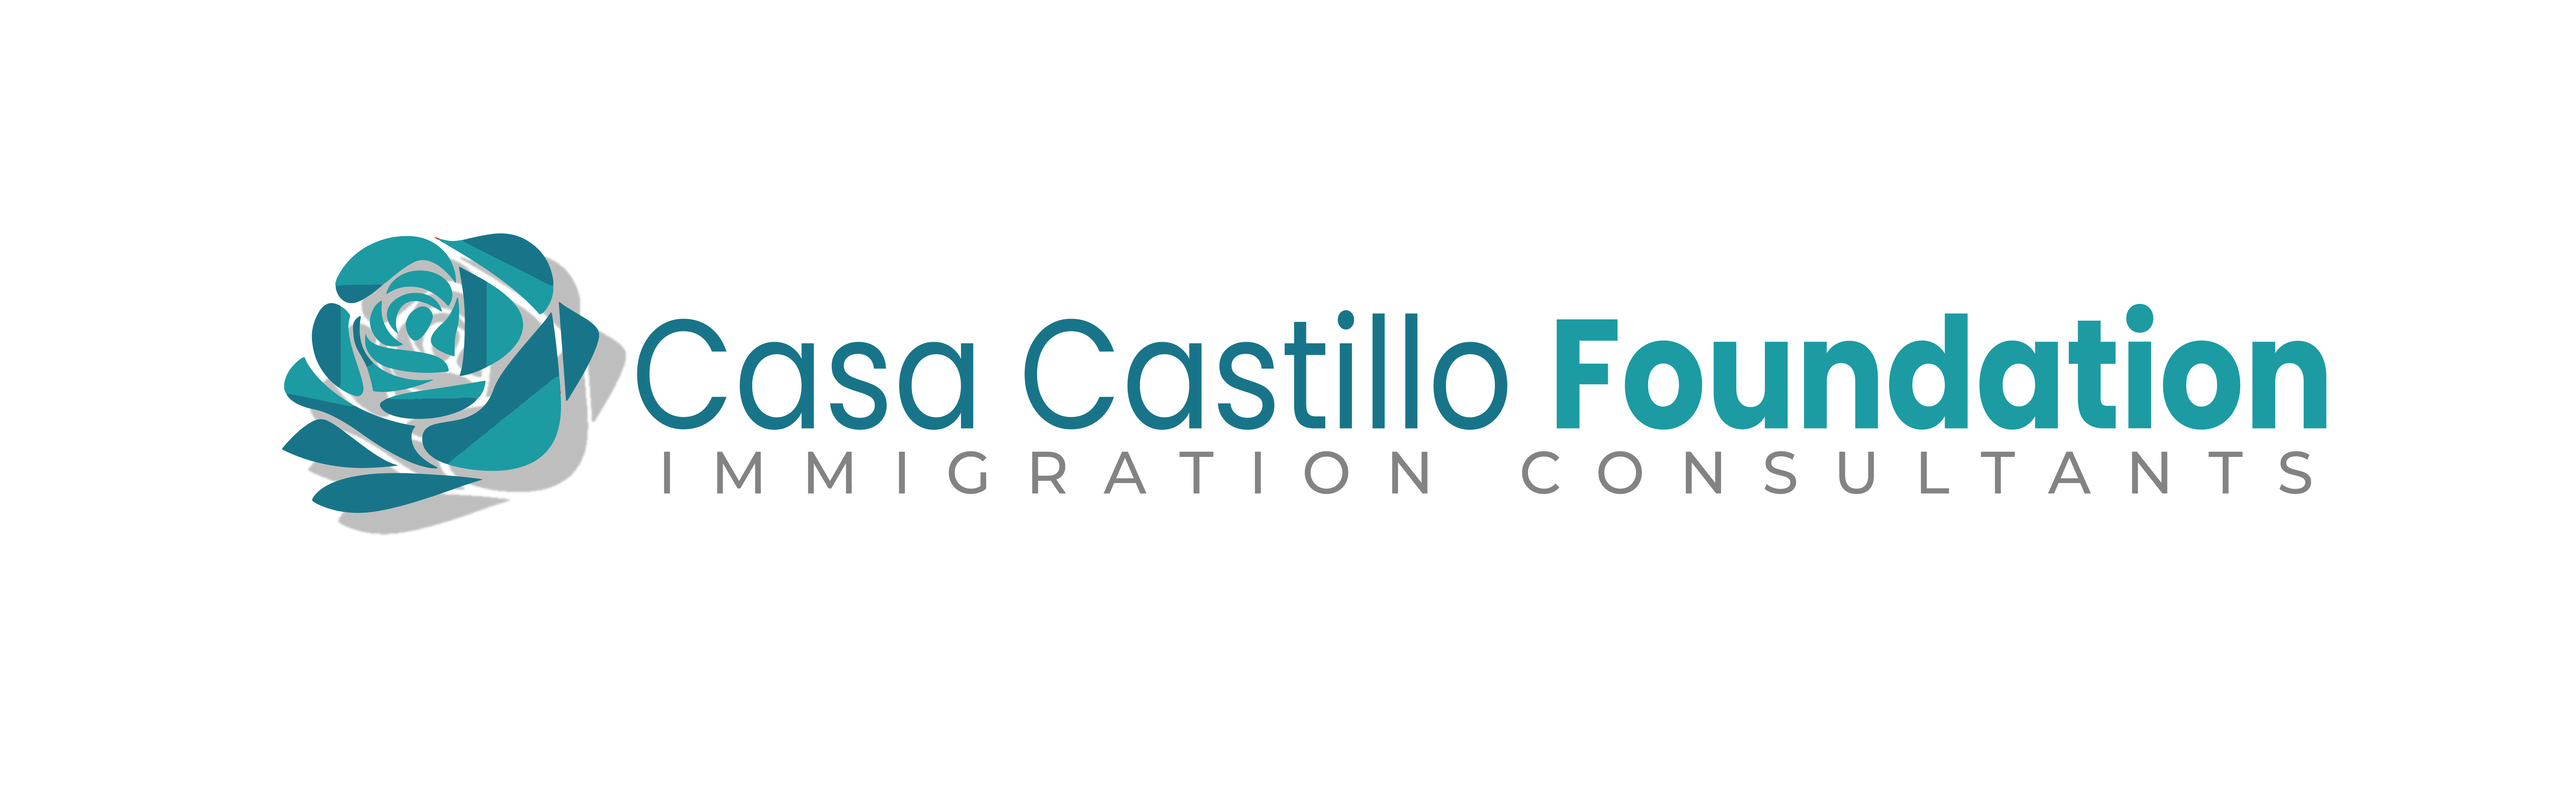 Imagotipo Casa Castillo Foundation 2-02